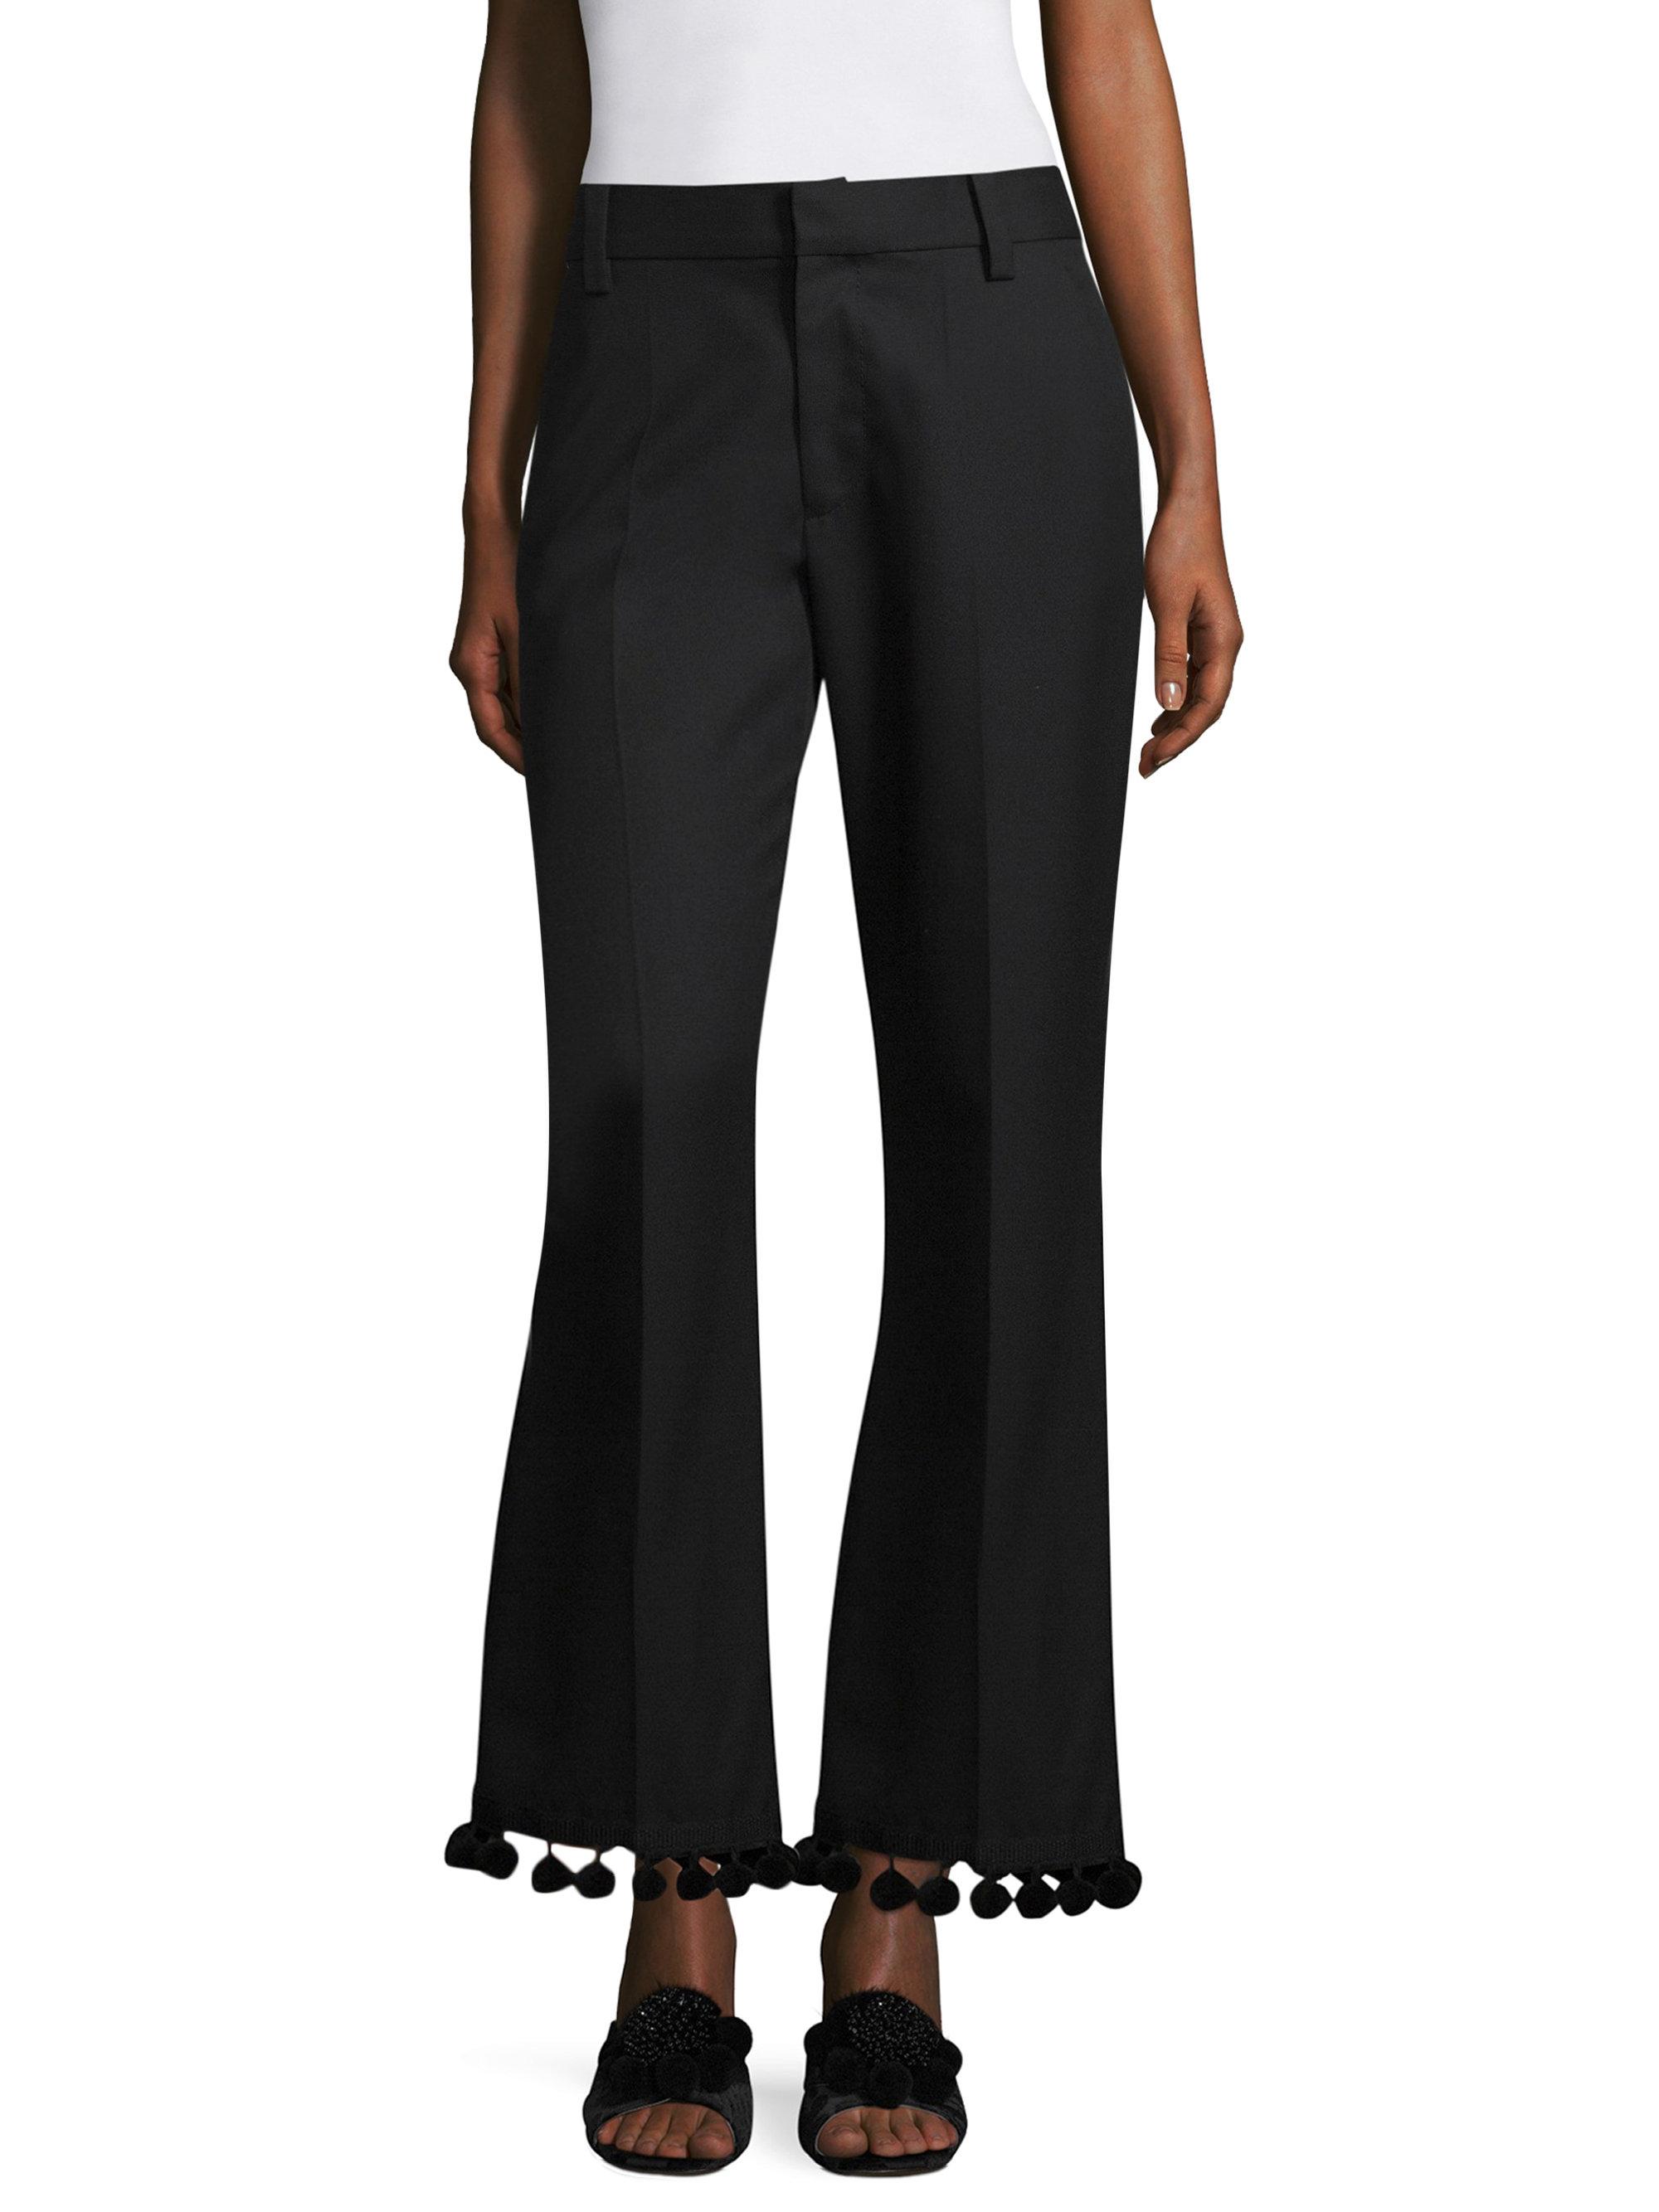 Marc Jacobs Silk Pom-pom Pants in Black - Lyst